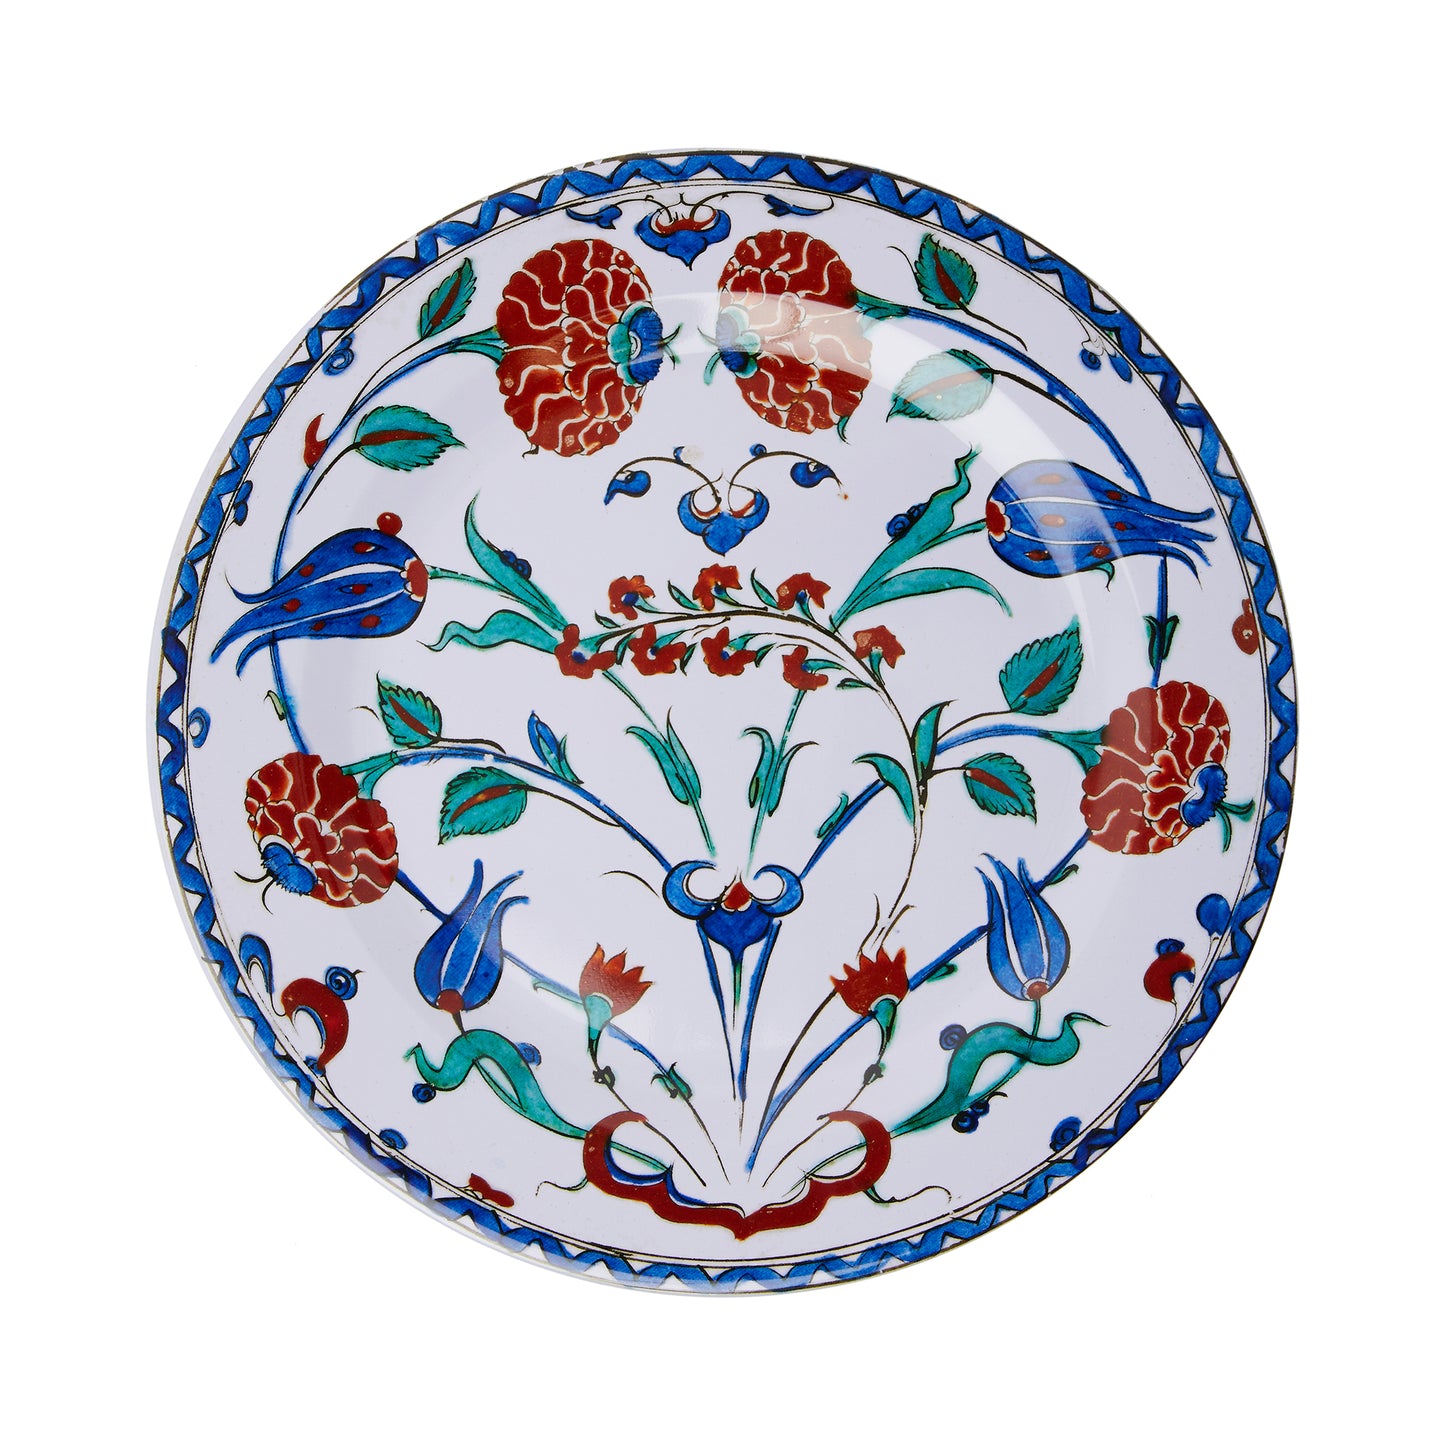 Tin plate with Iznik Tile design 